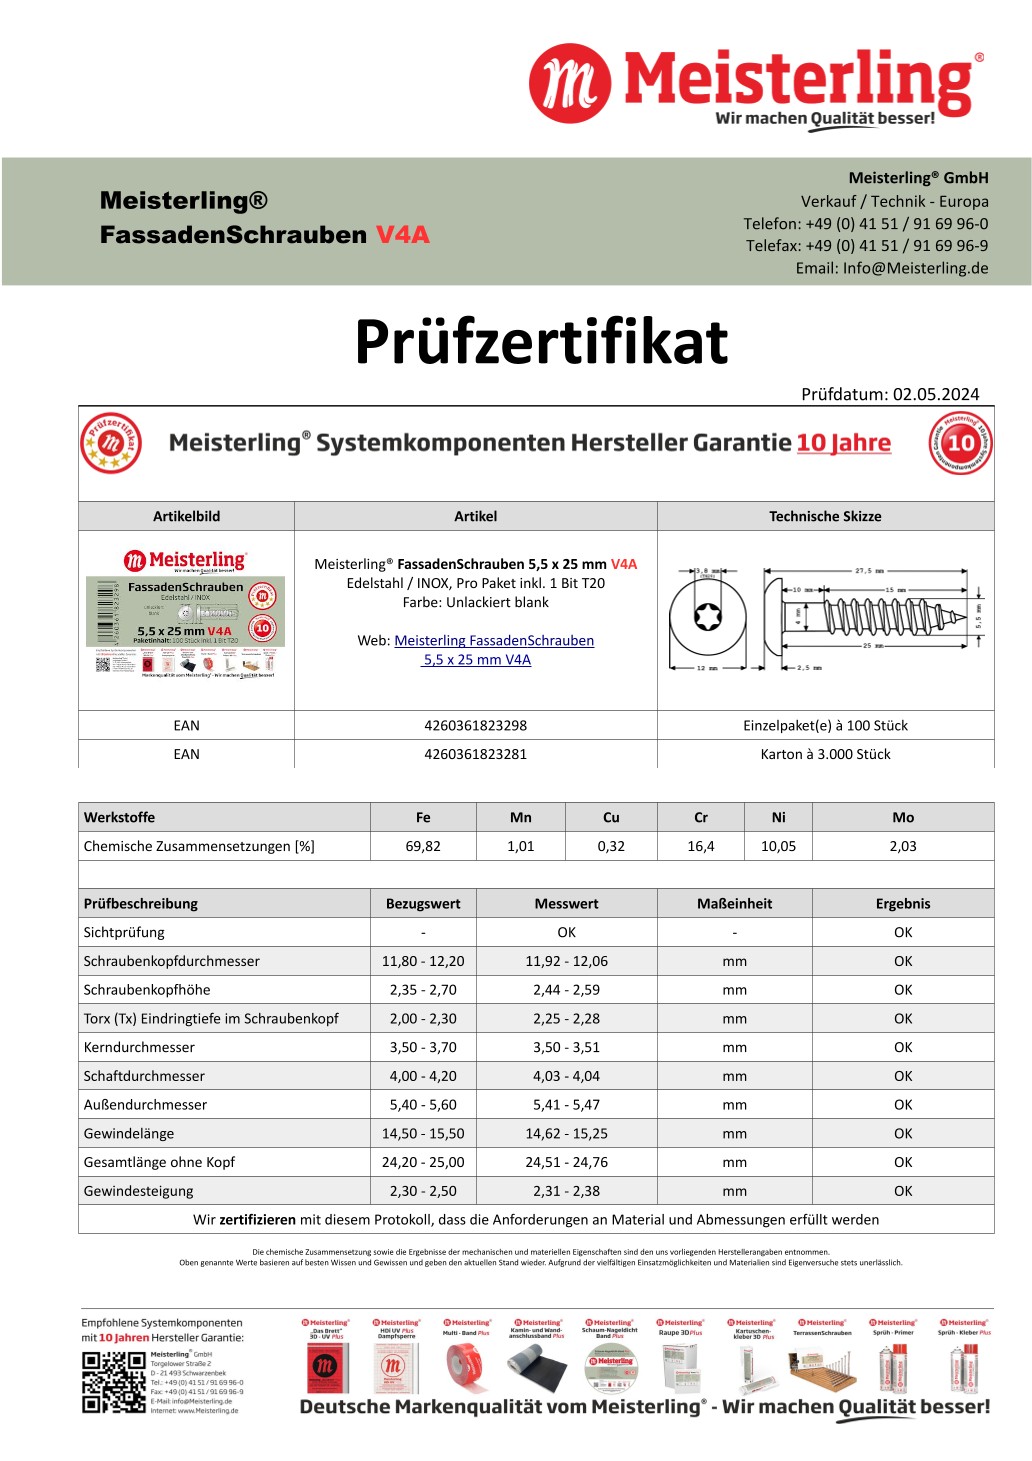 Prüfzertifikat Meisterling® FassadenSchrauben 5,5 x 25 mm V4a blank